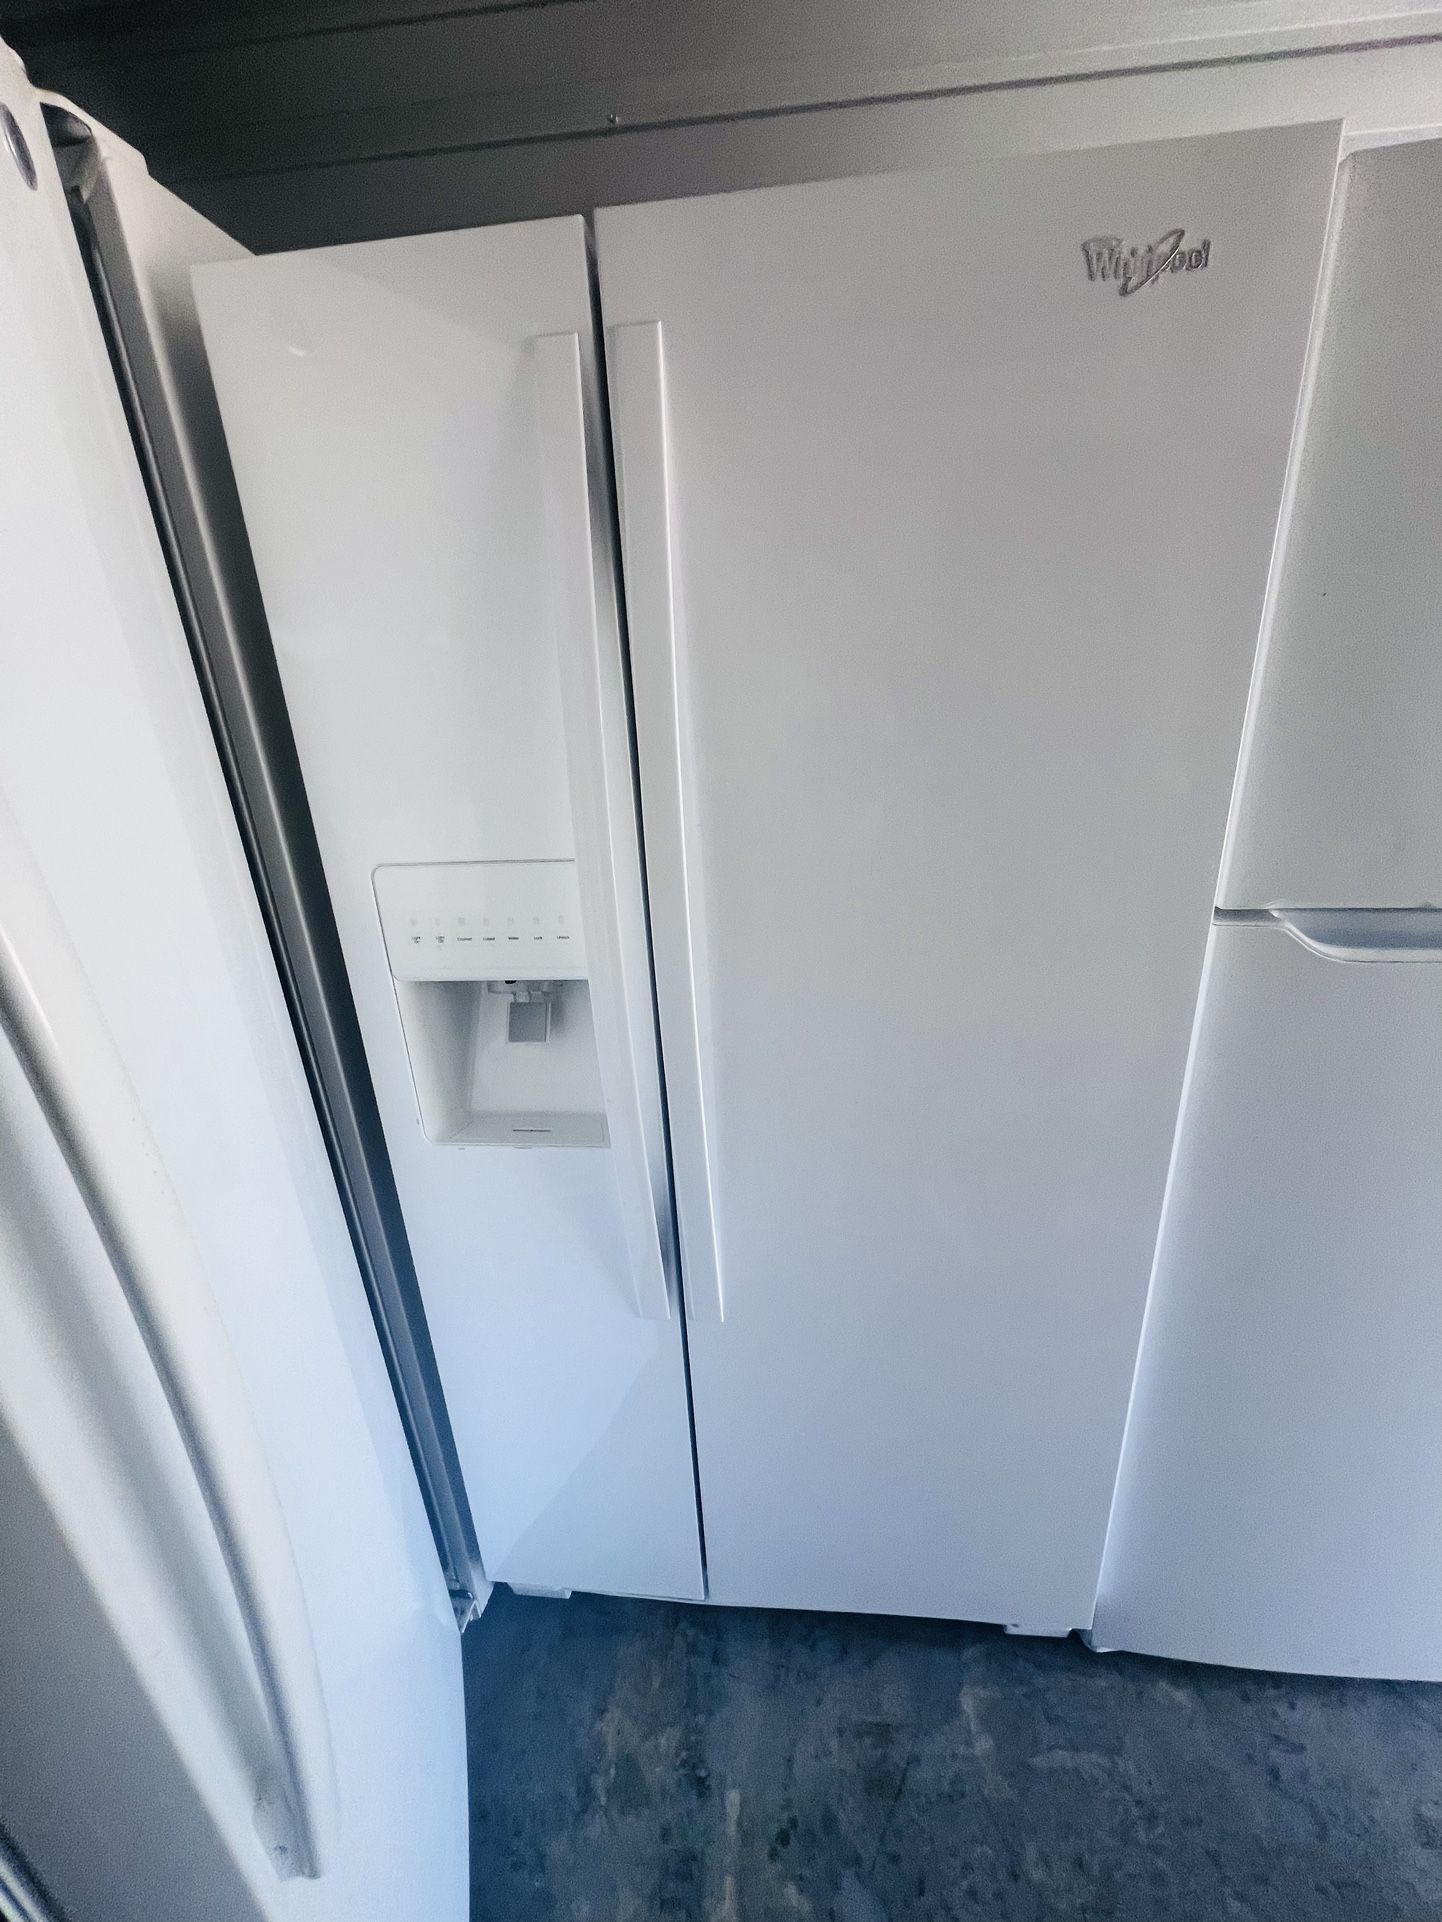 GE Side By Side Refrigerator 